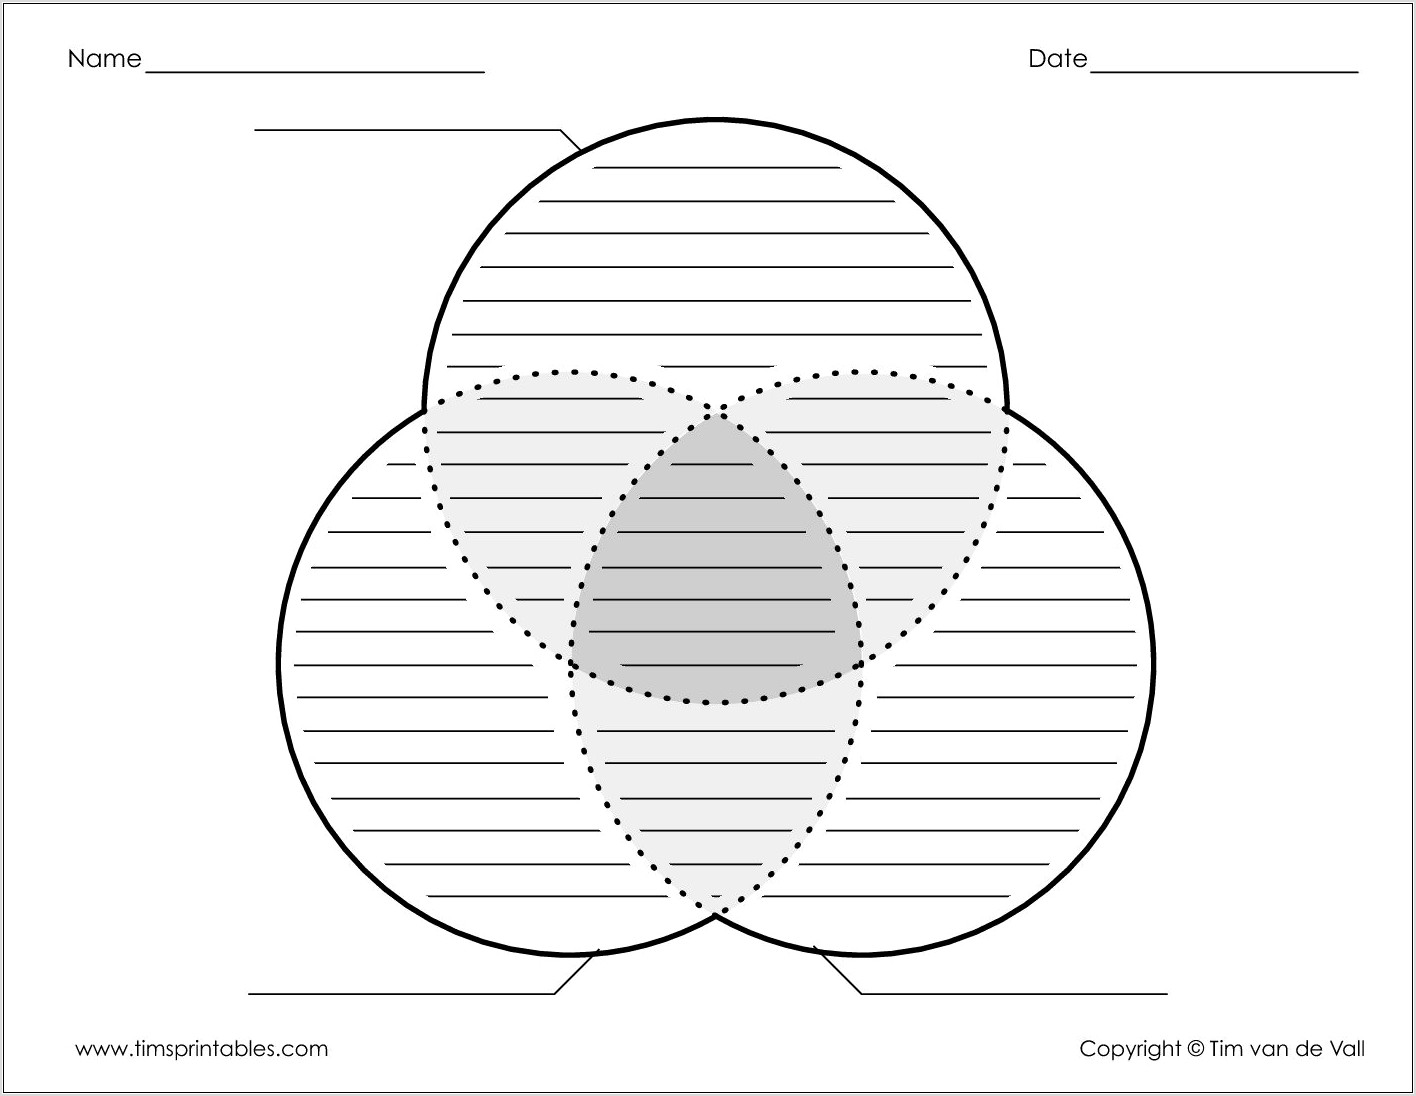 Editable Venn Diagram 3 Circles